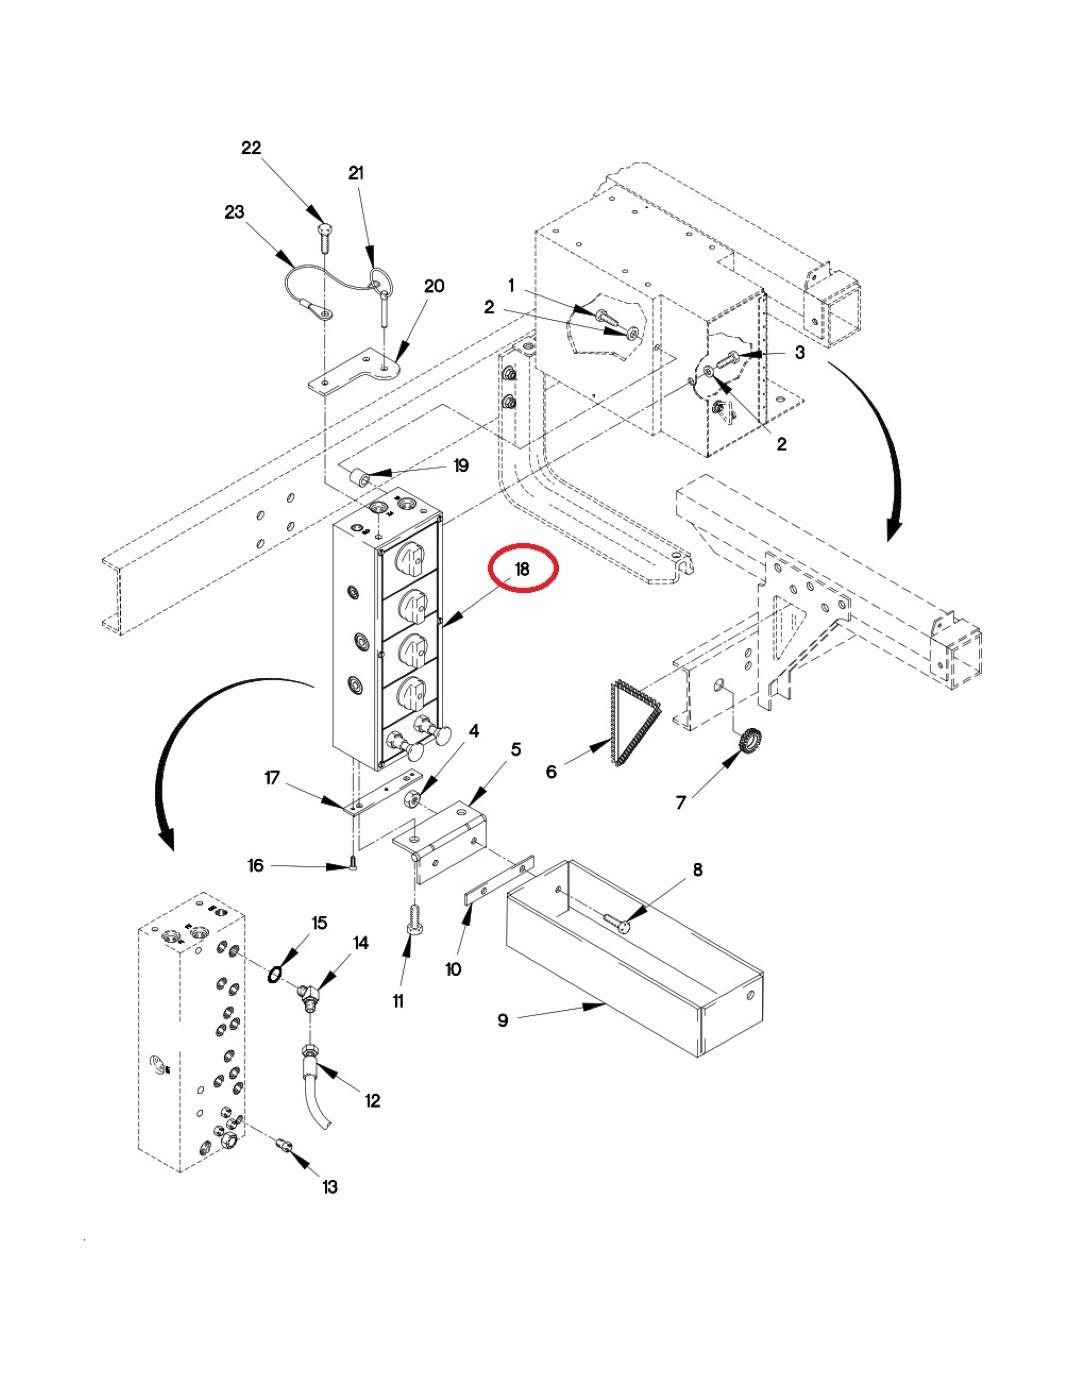 FM-292 | FM-292 Control Hydraulic Diverter Valve Assembly Parts Diagram (Large).jpg